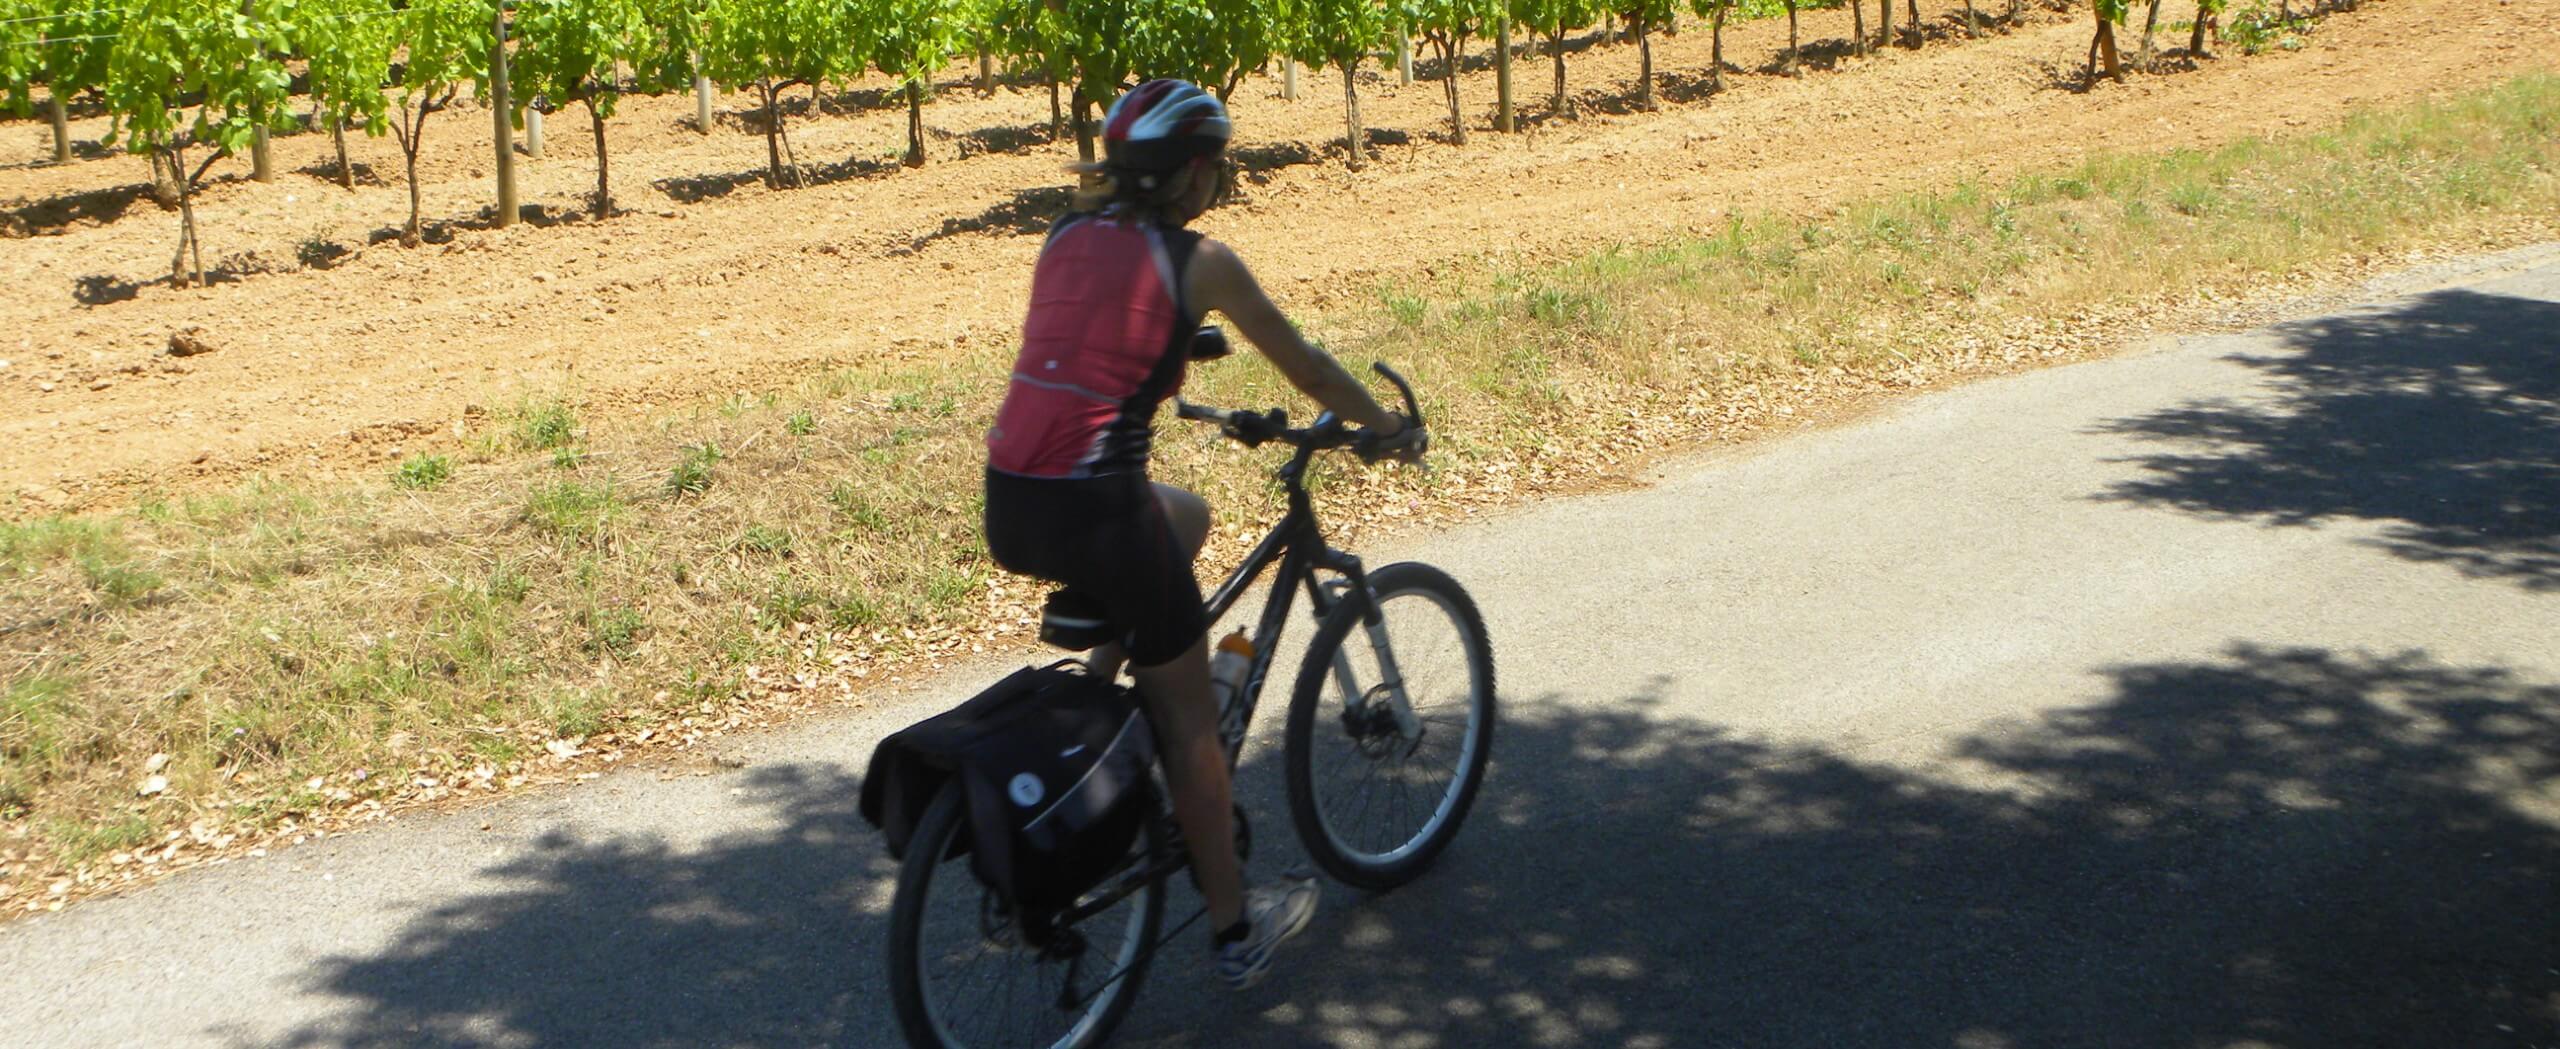 Wine Tour of La Rioja by Bike